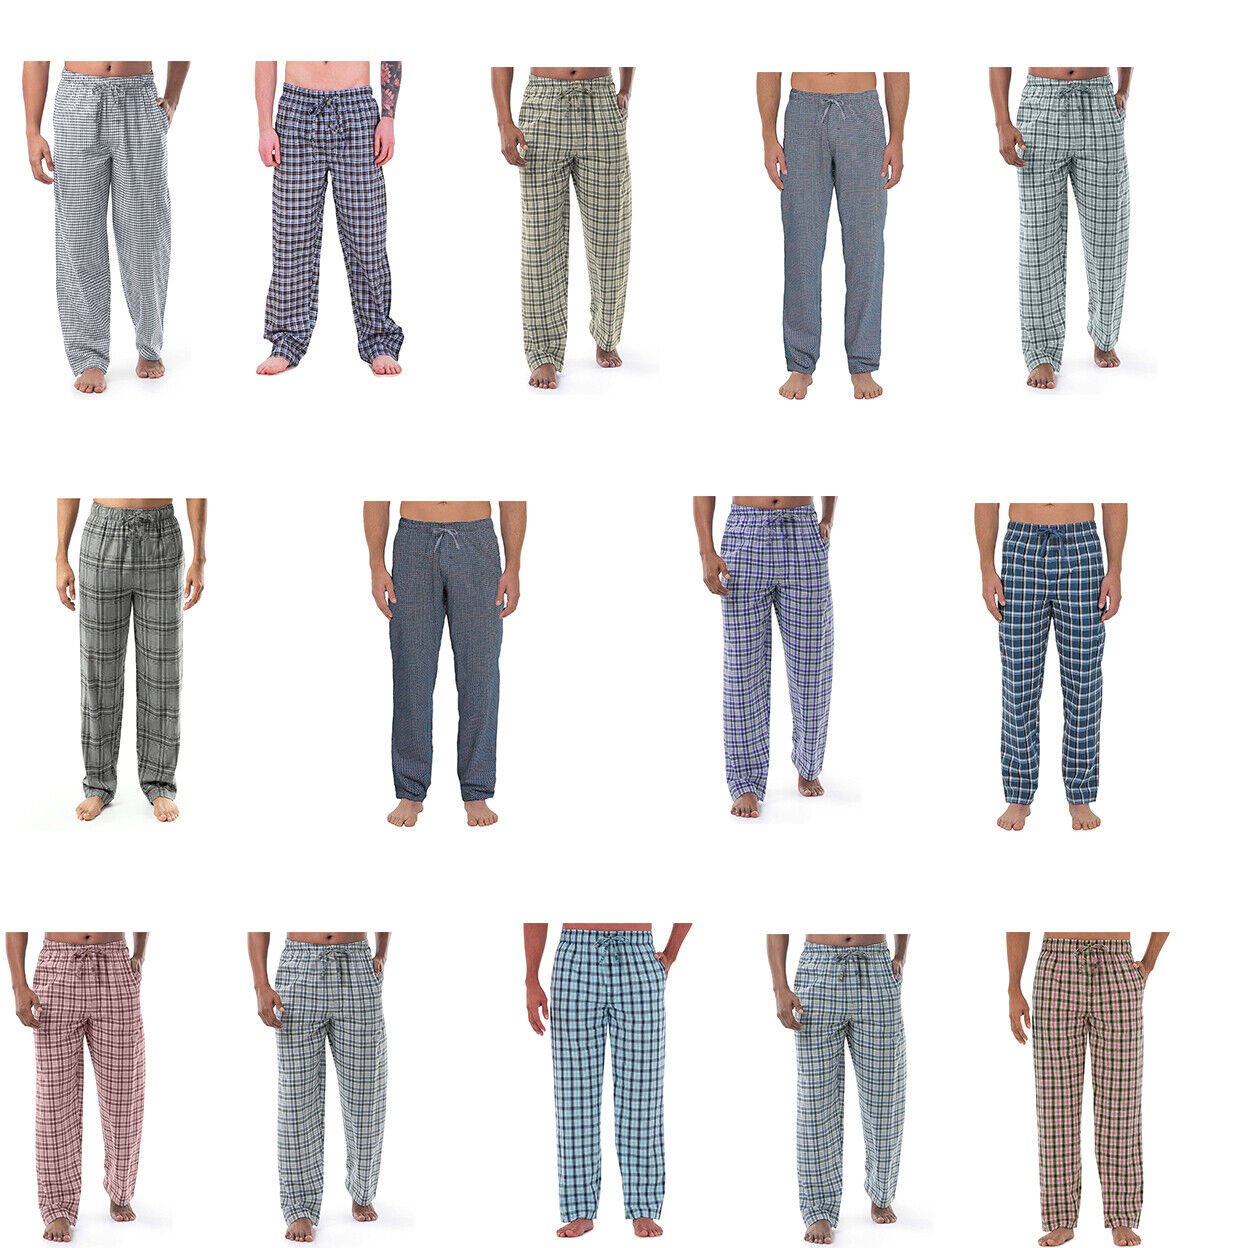 5-Pack: Men's Ultra-Soft Plaid Cotton Jersey Knit Comfy Sleep Lounge Pajama Pants - Small